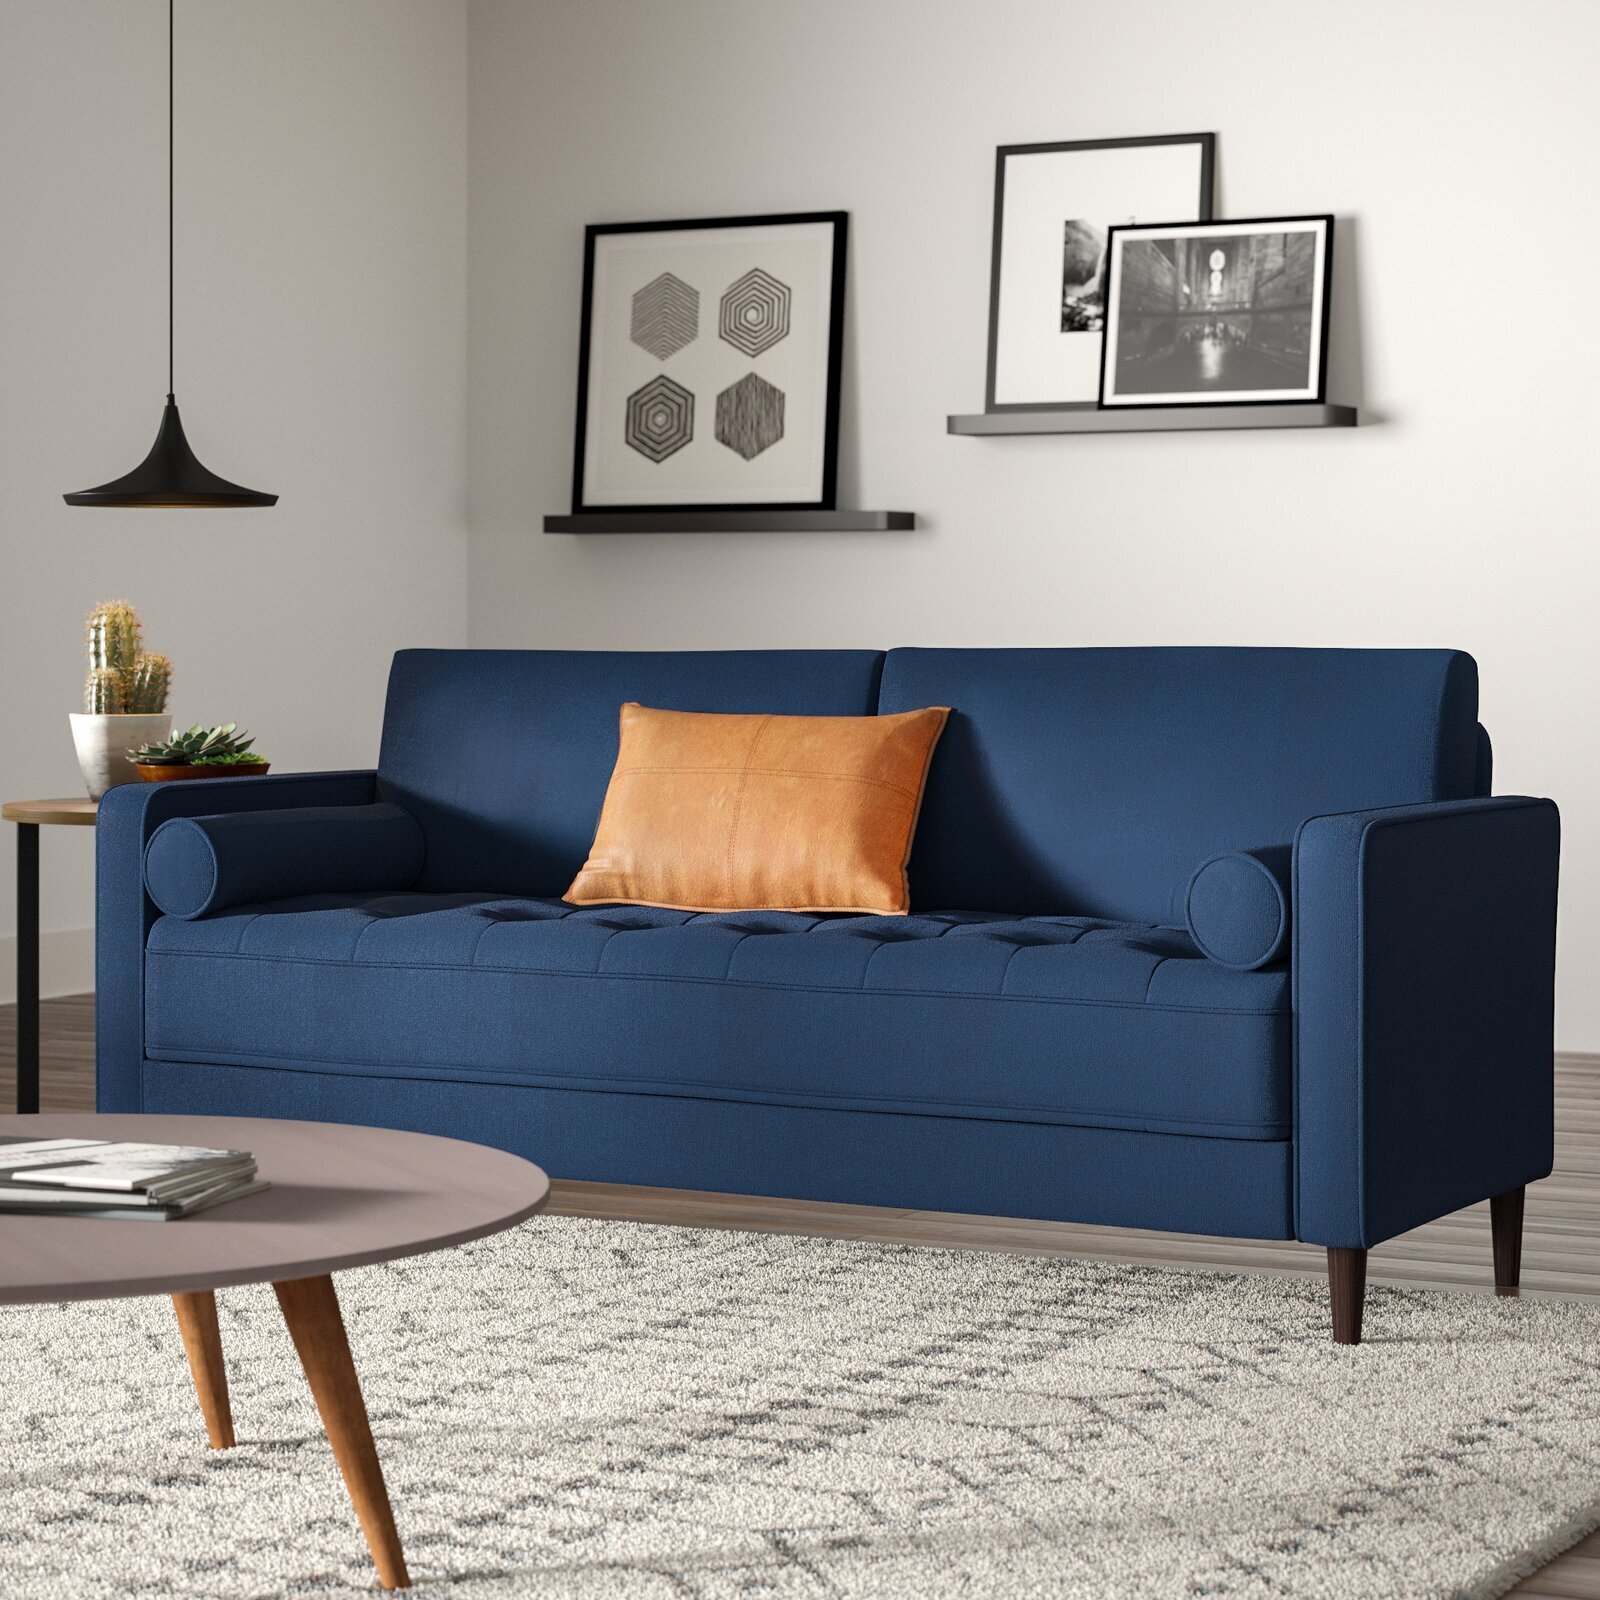 Small Denim Furniture for Living Room